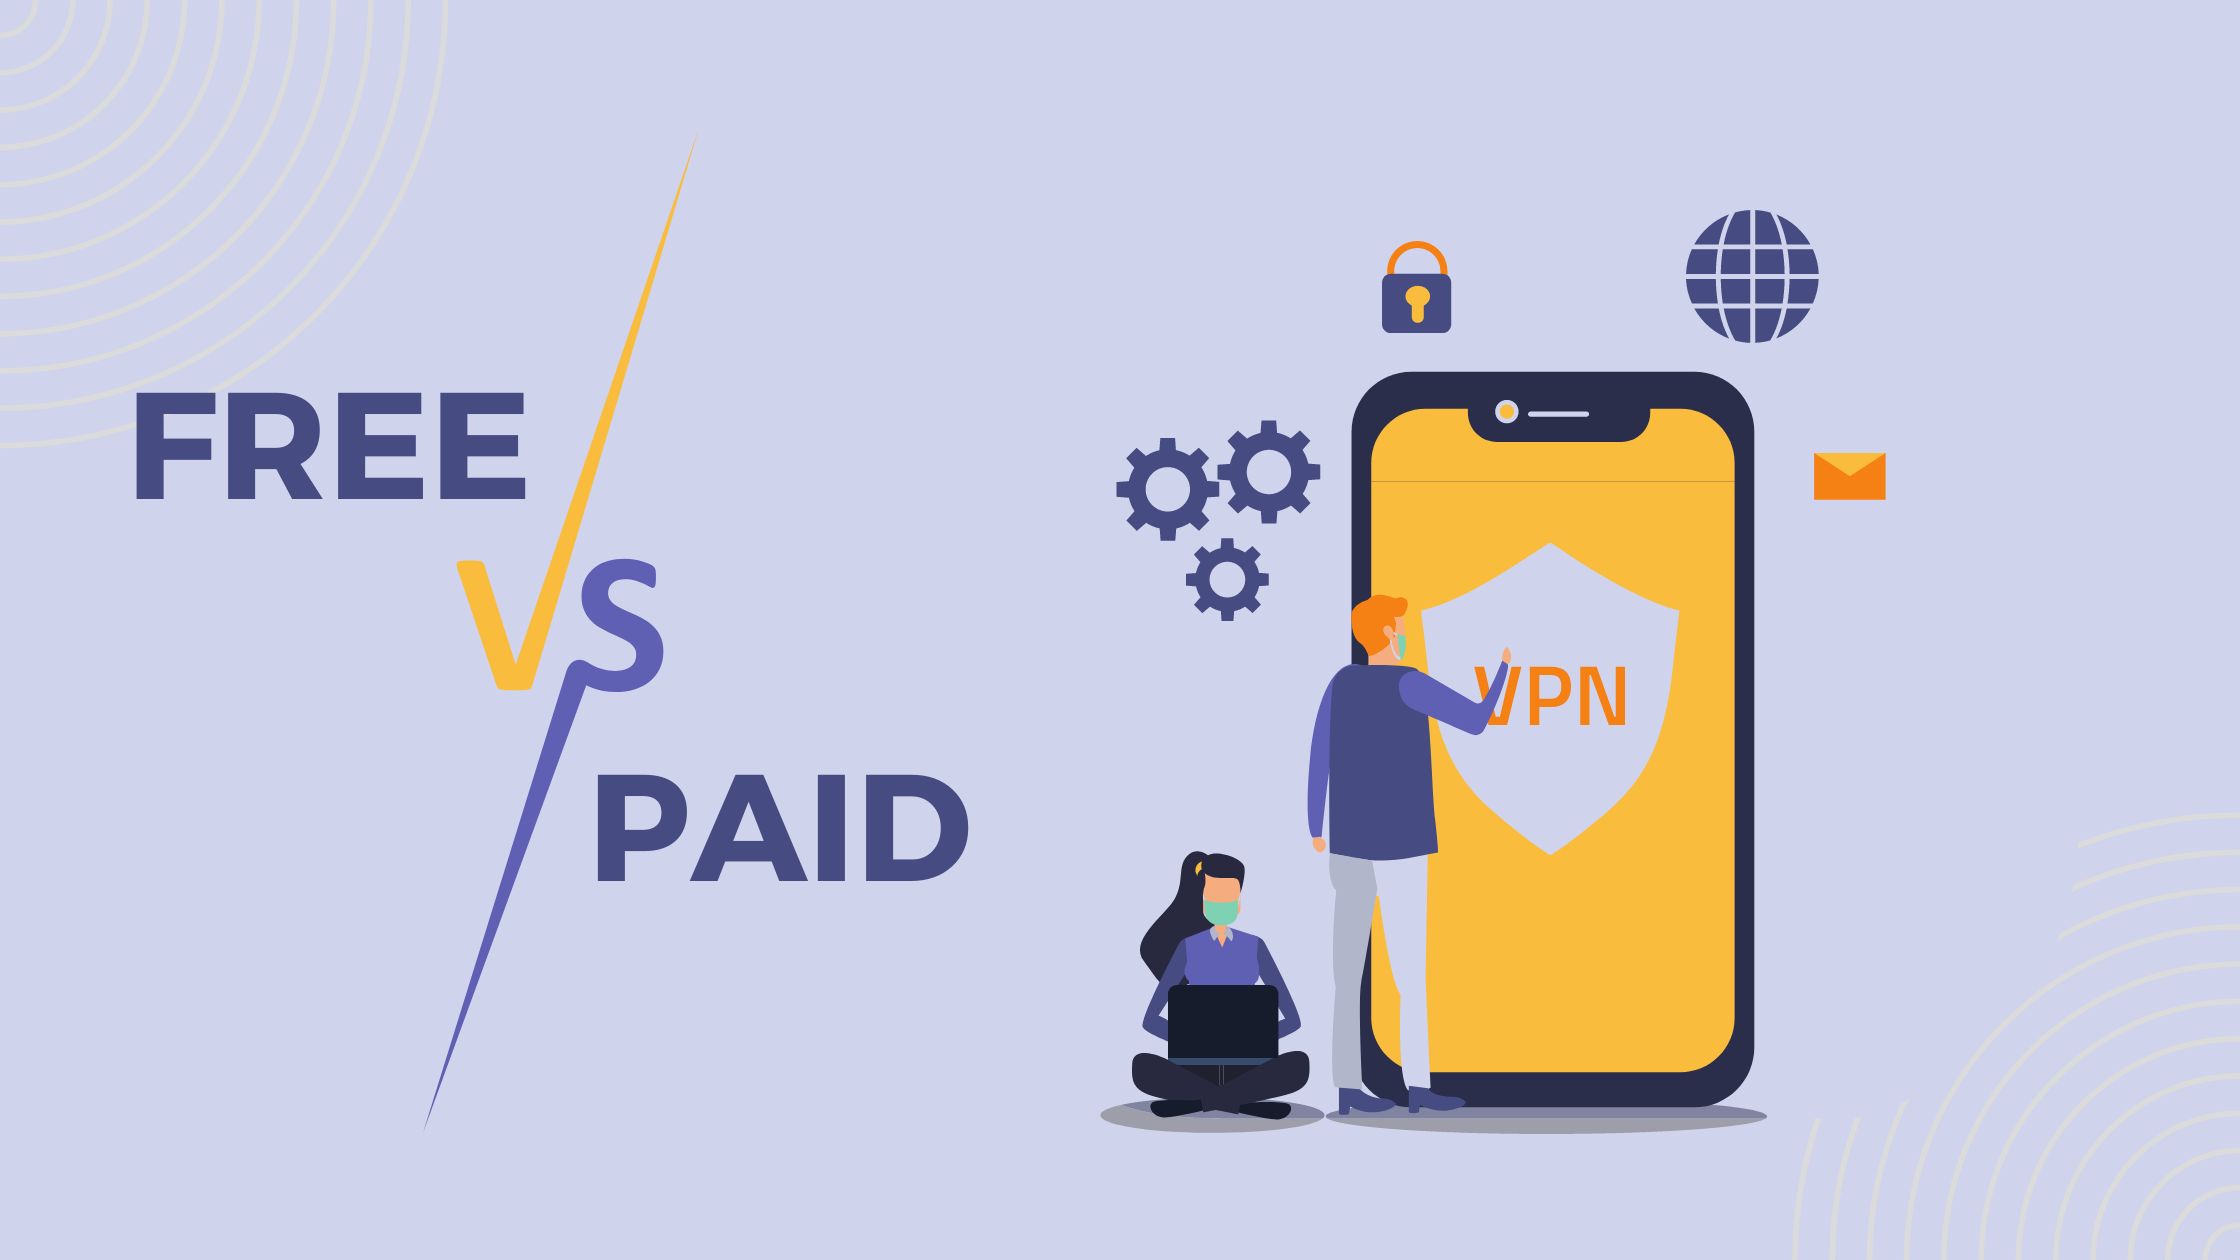 Free VPN VS Paid VPN